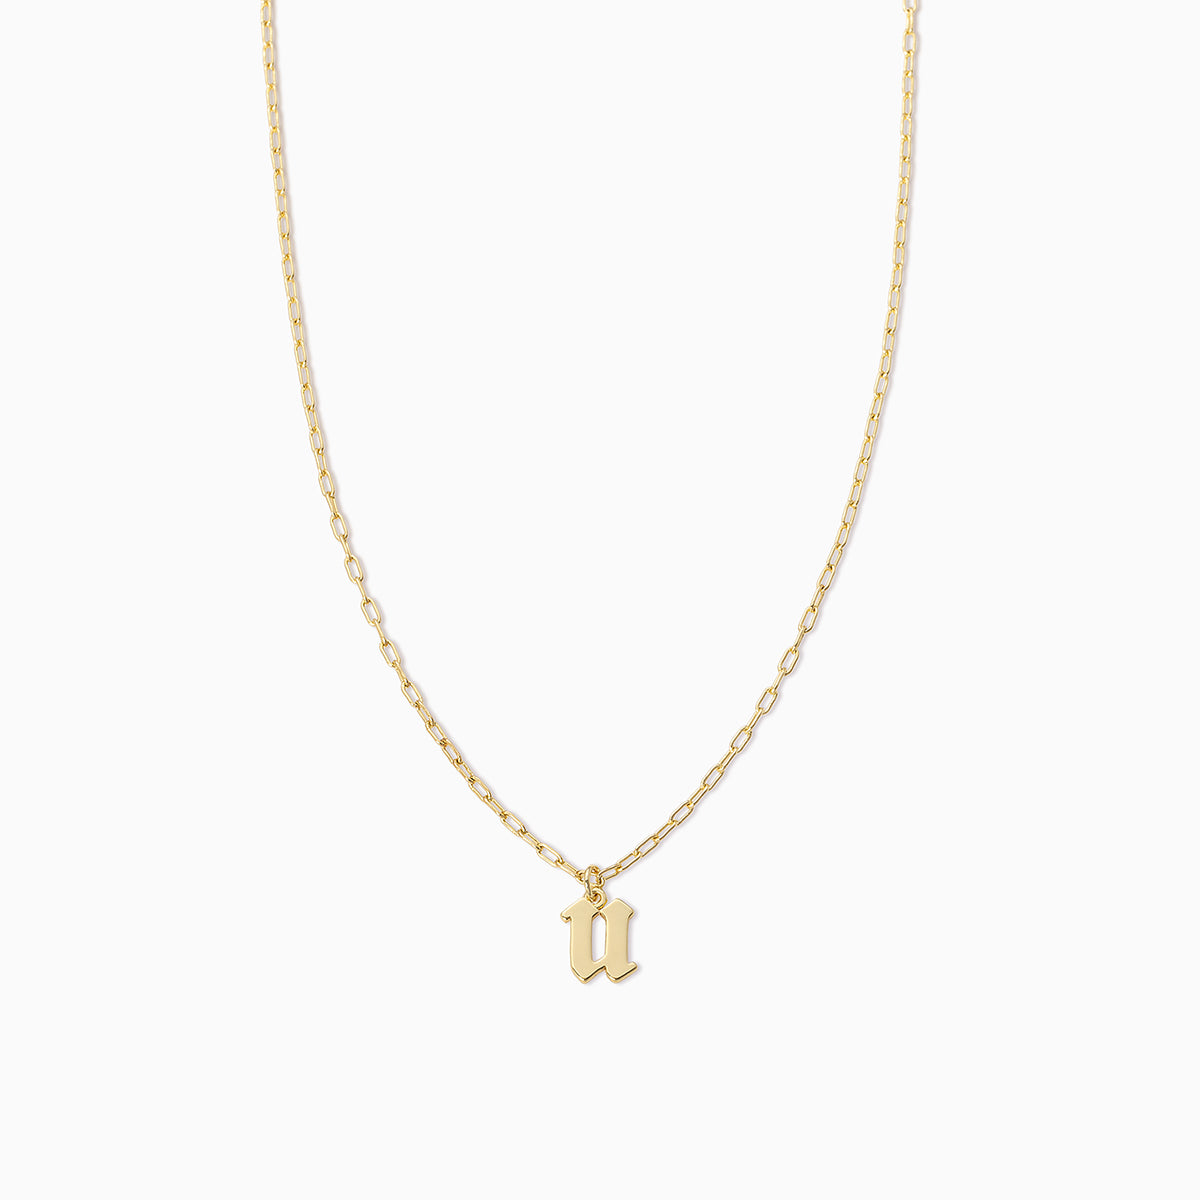 Gothic Initial Pendant Necklace | Gold U | Product Image | Uncommon James